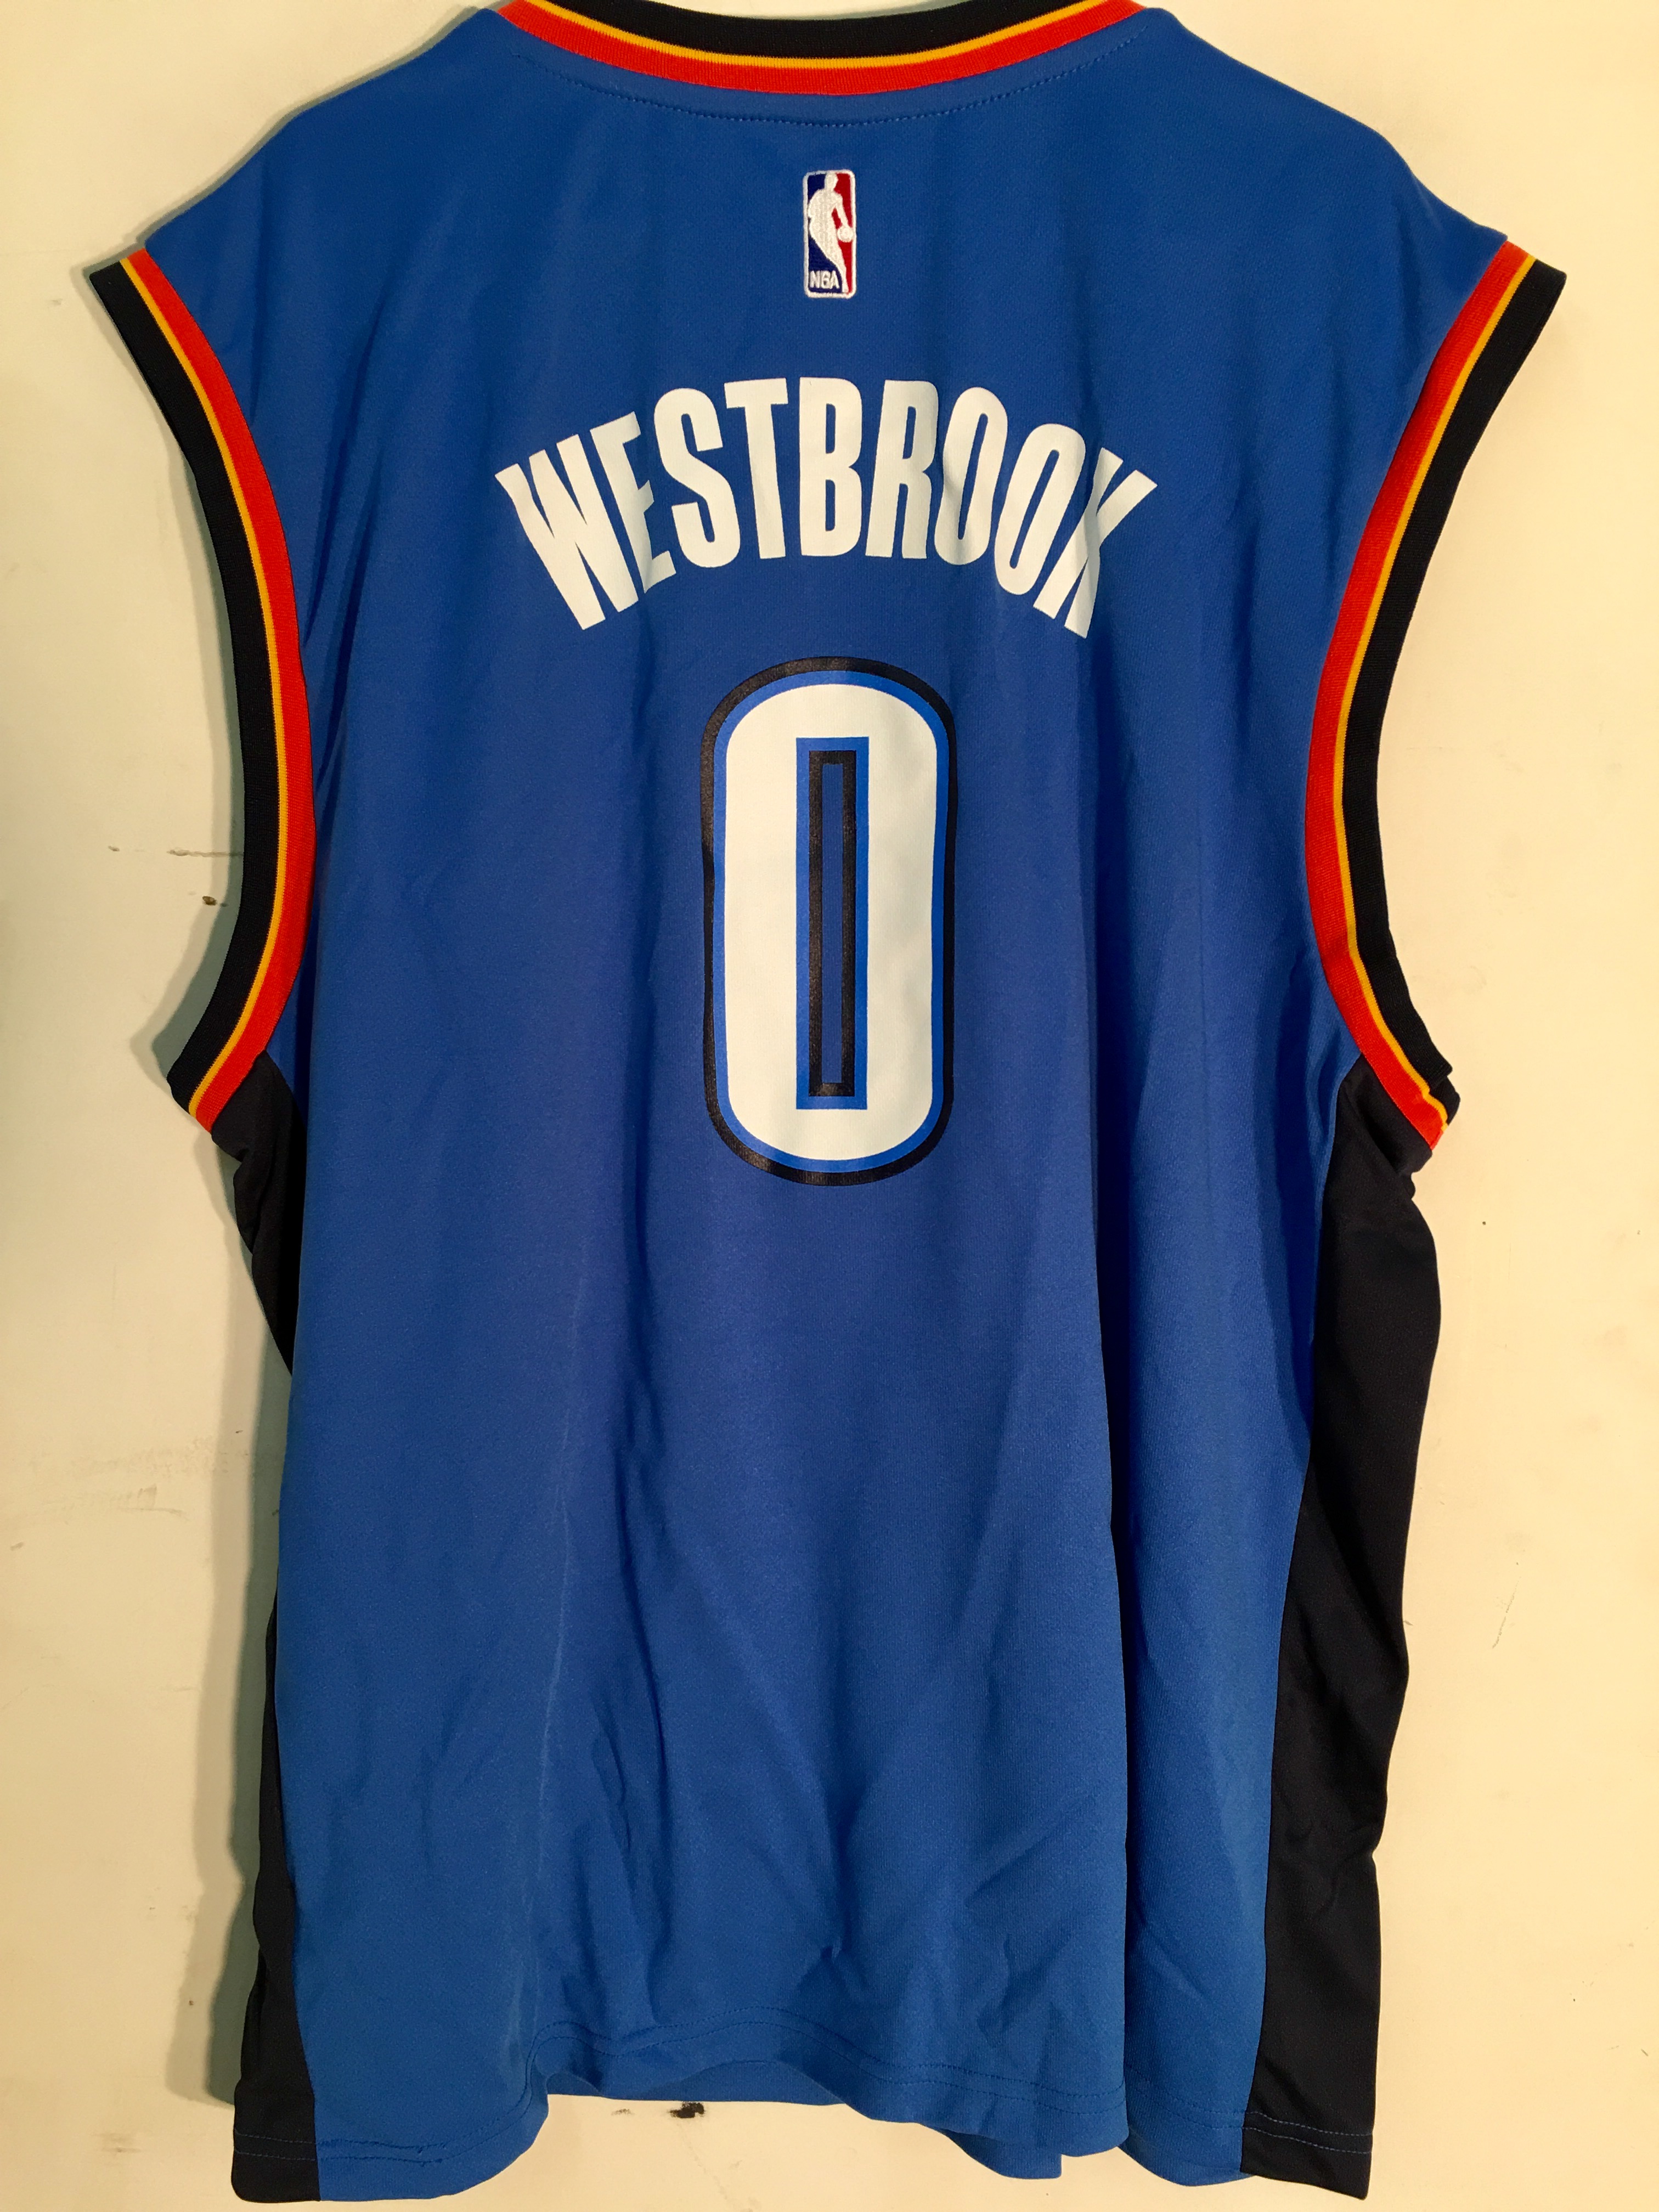 adidas westbrook jersey